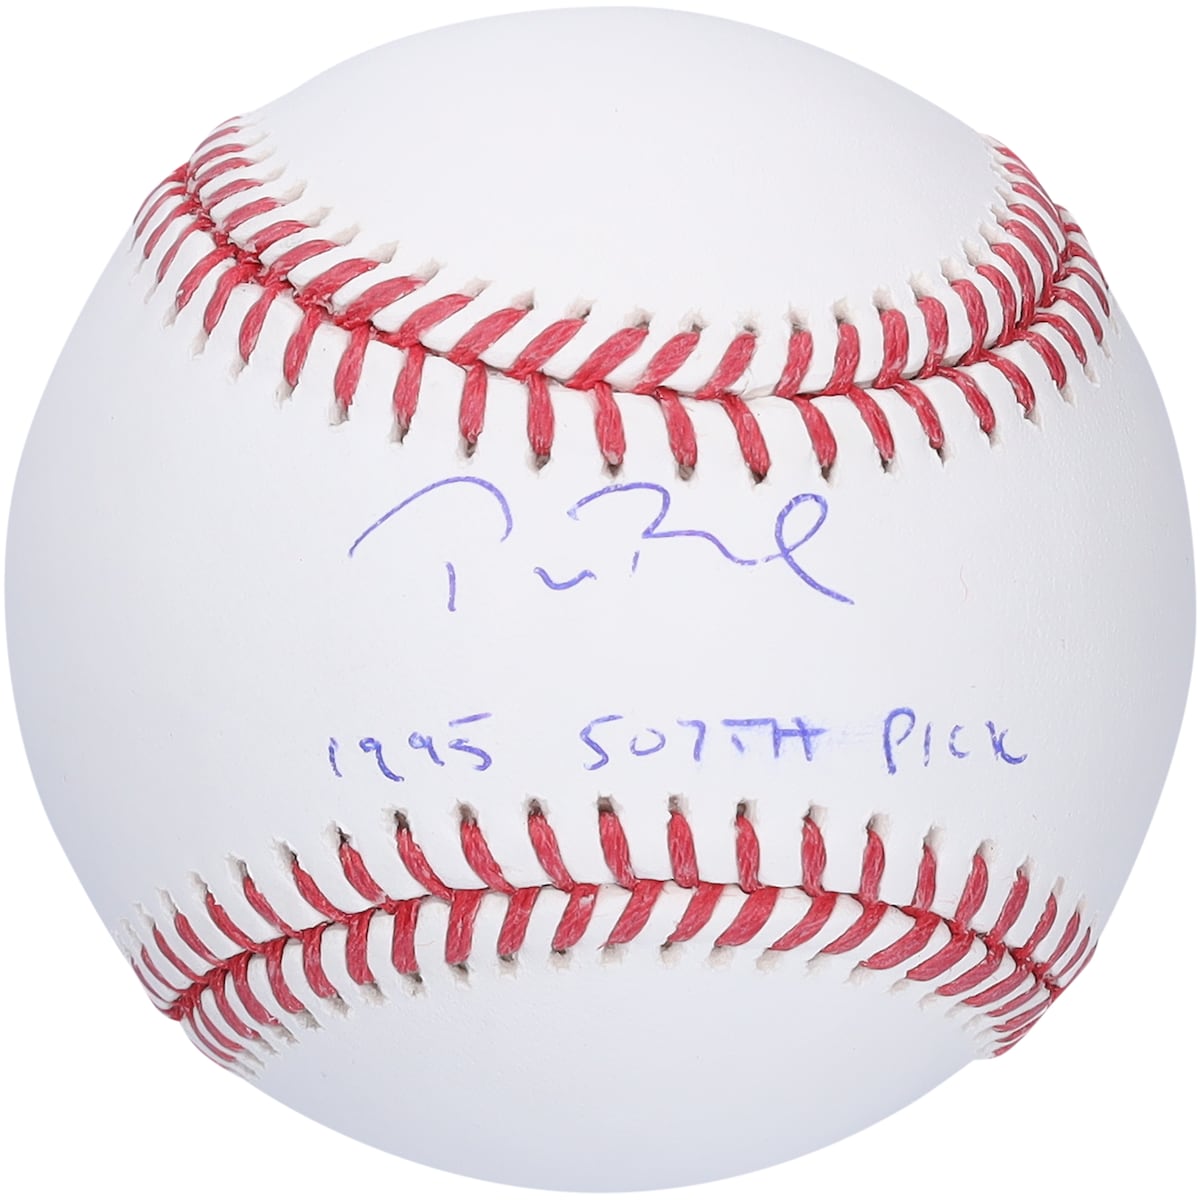 Tom Brady Montreal Expos Autographed Rawlings Baseball with 